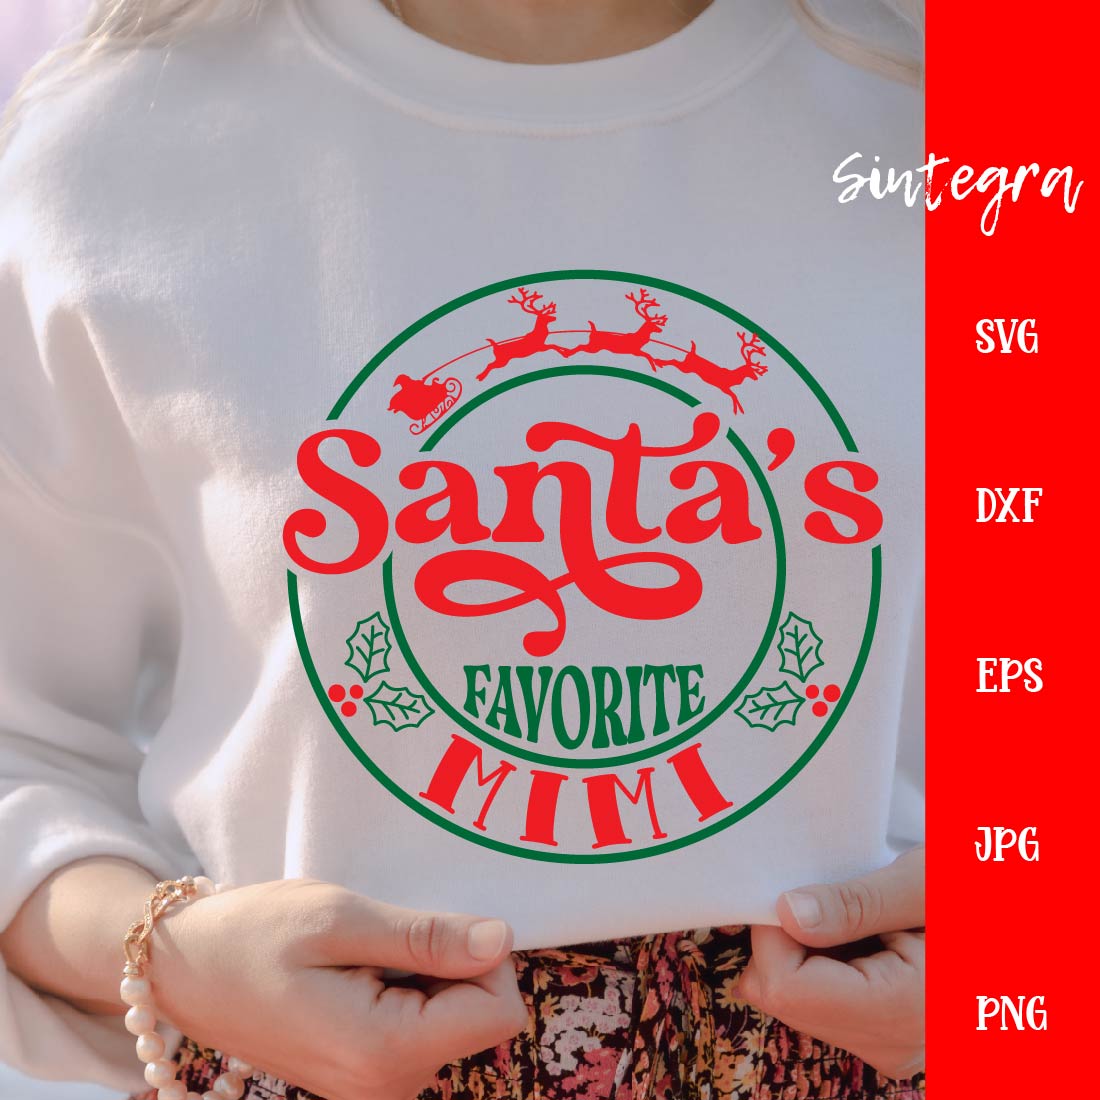 Santa's Favorite Mimi SVG created by Sintegra.